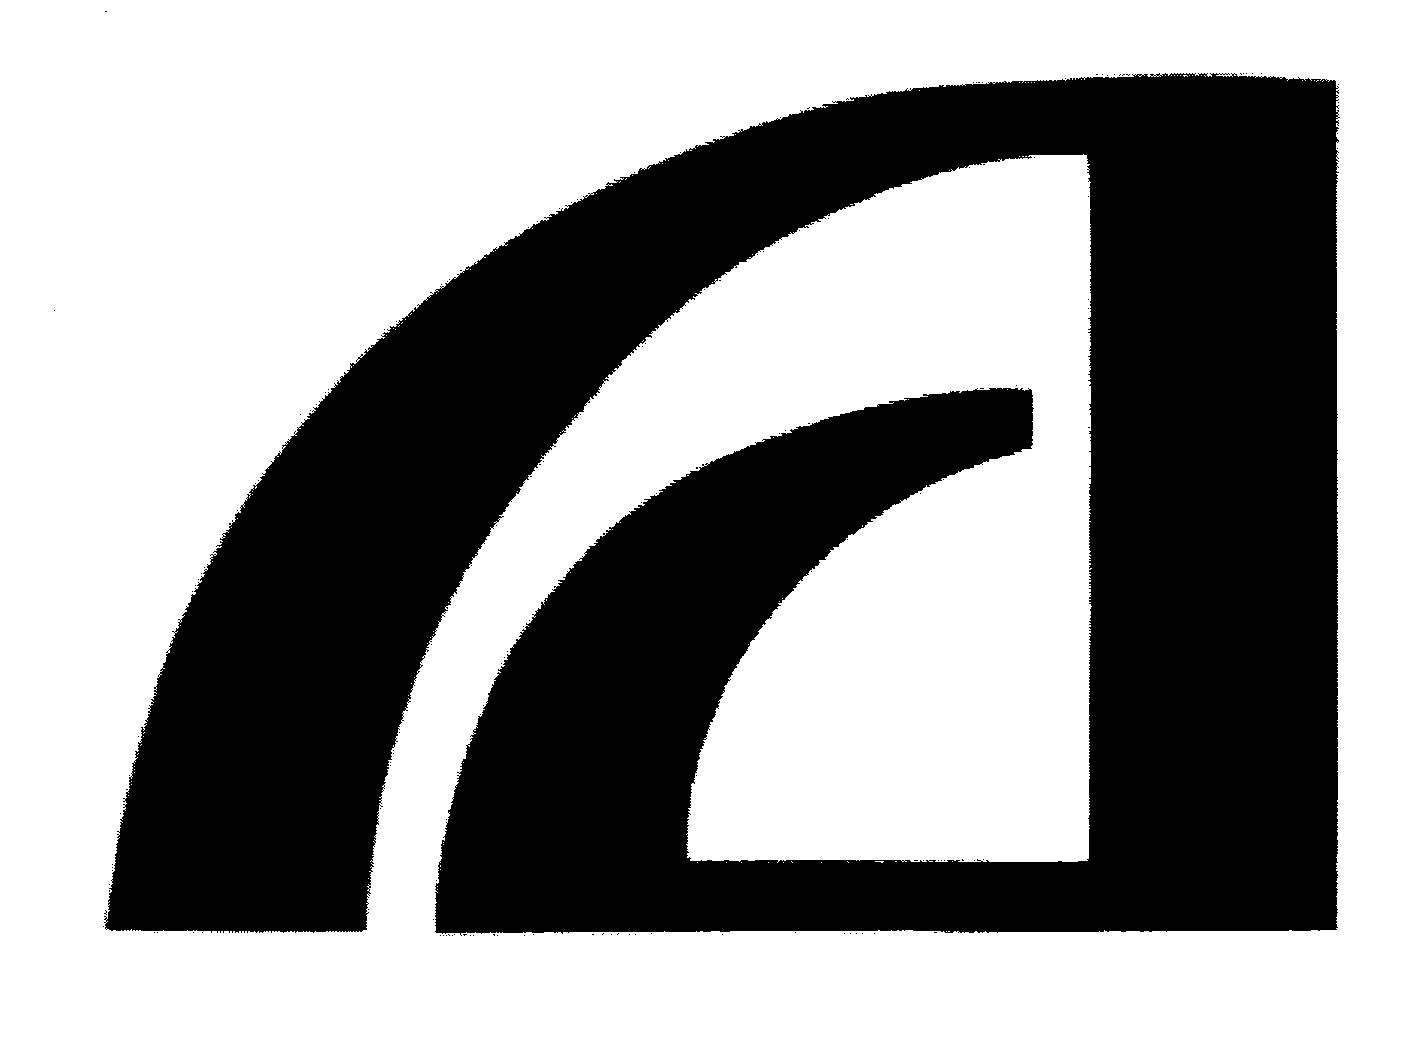 Trademark Logo RA